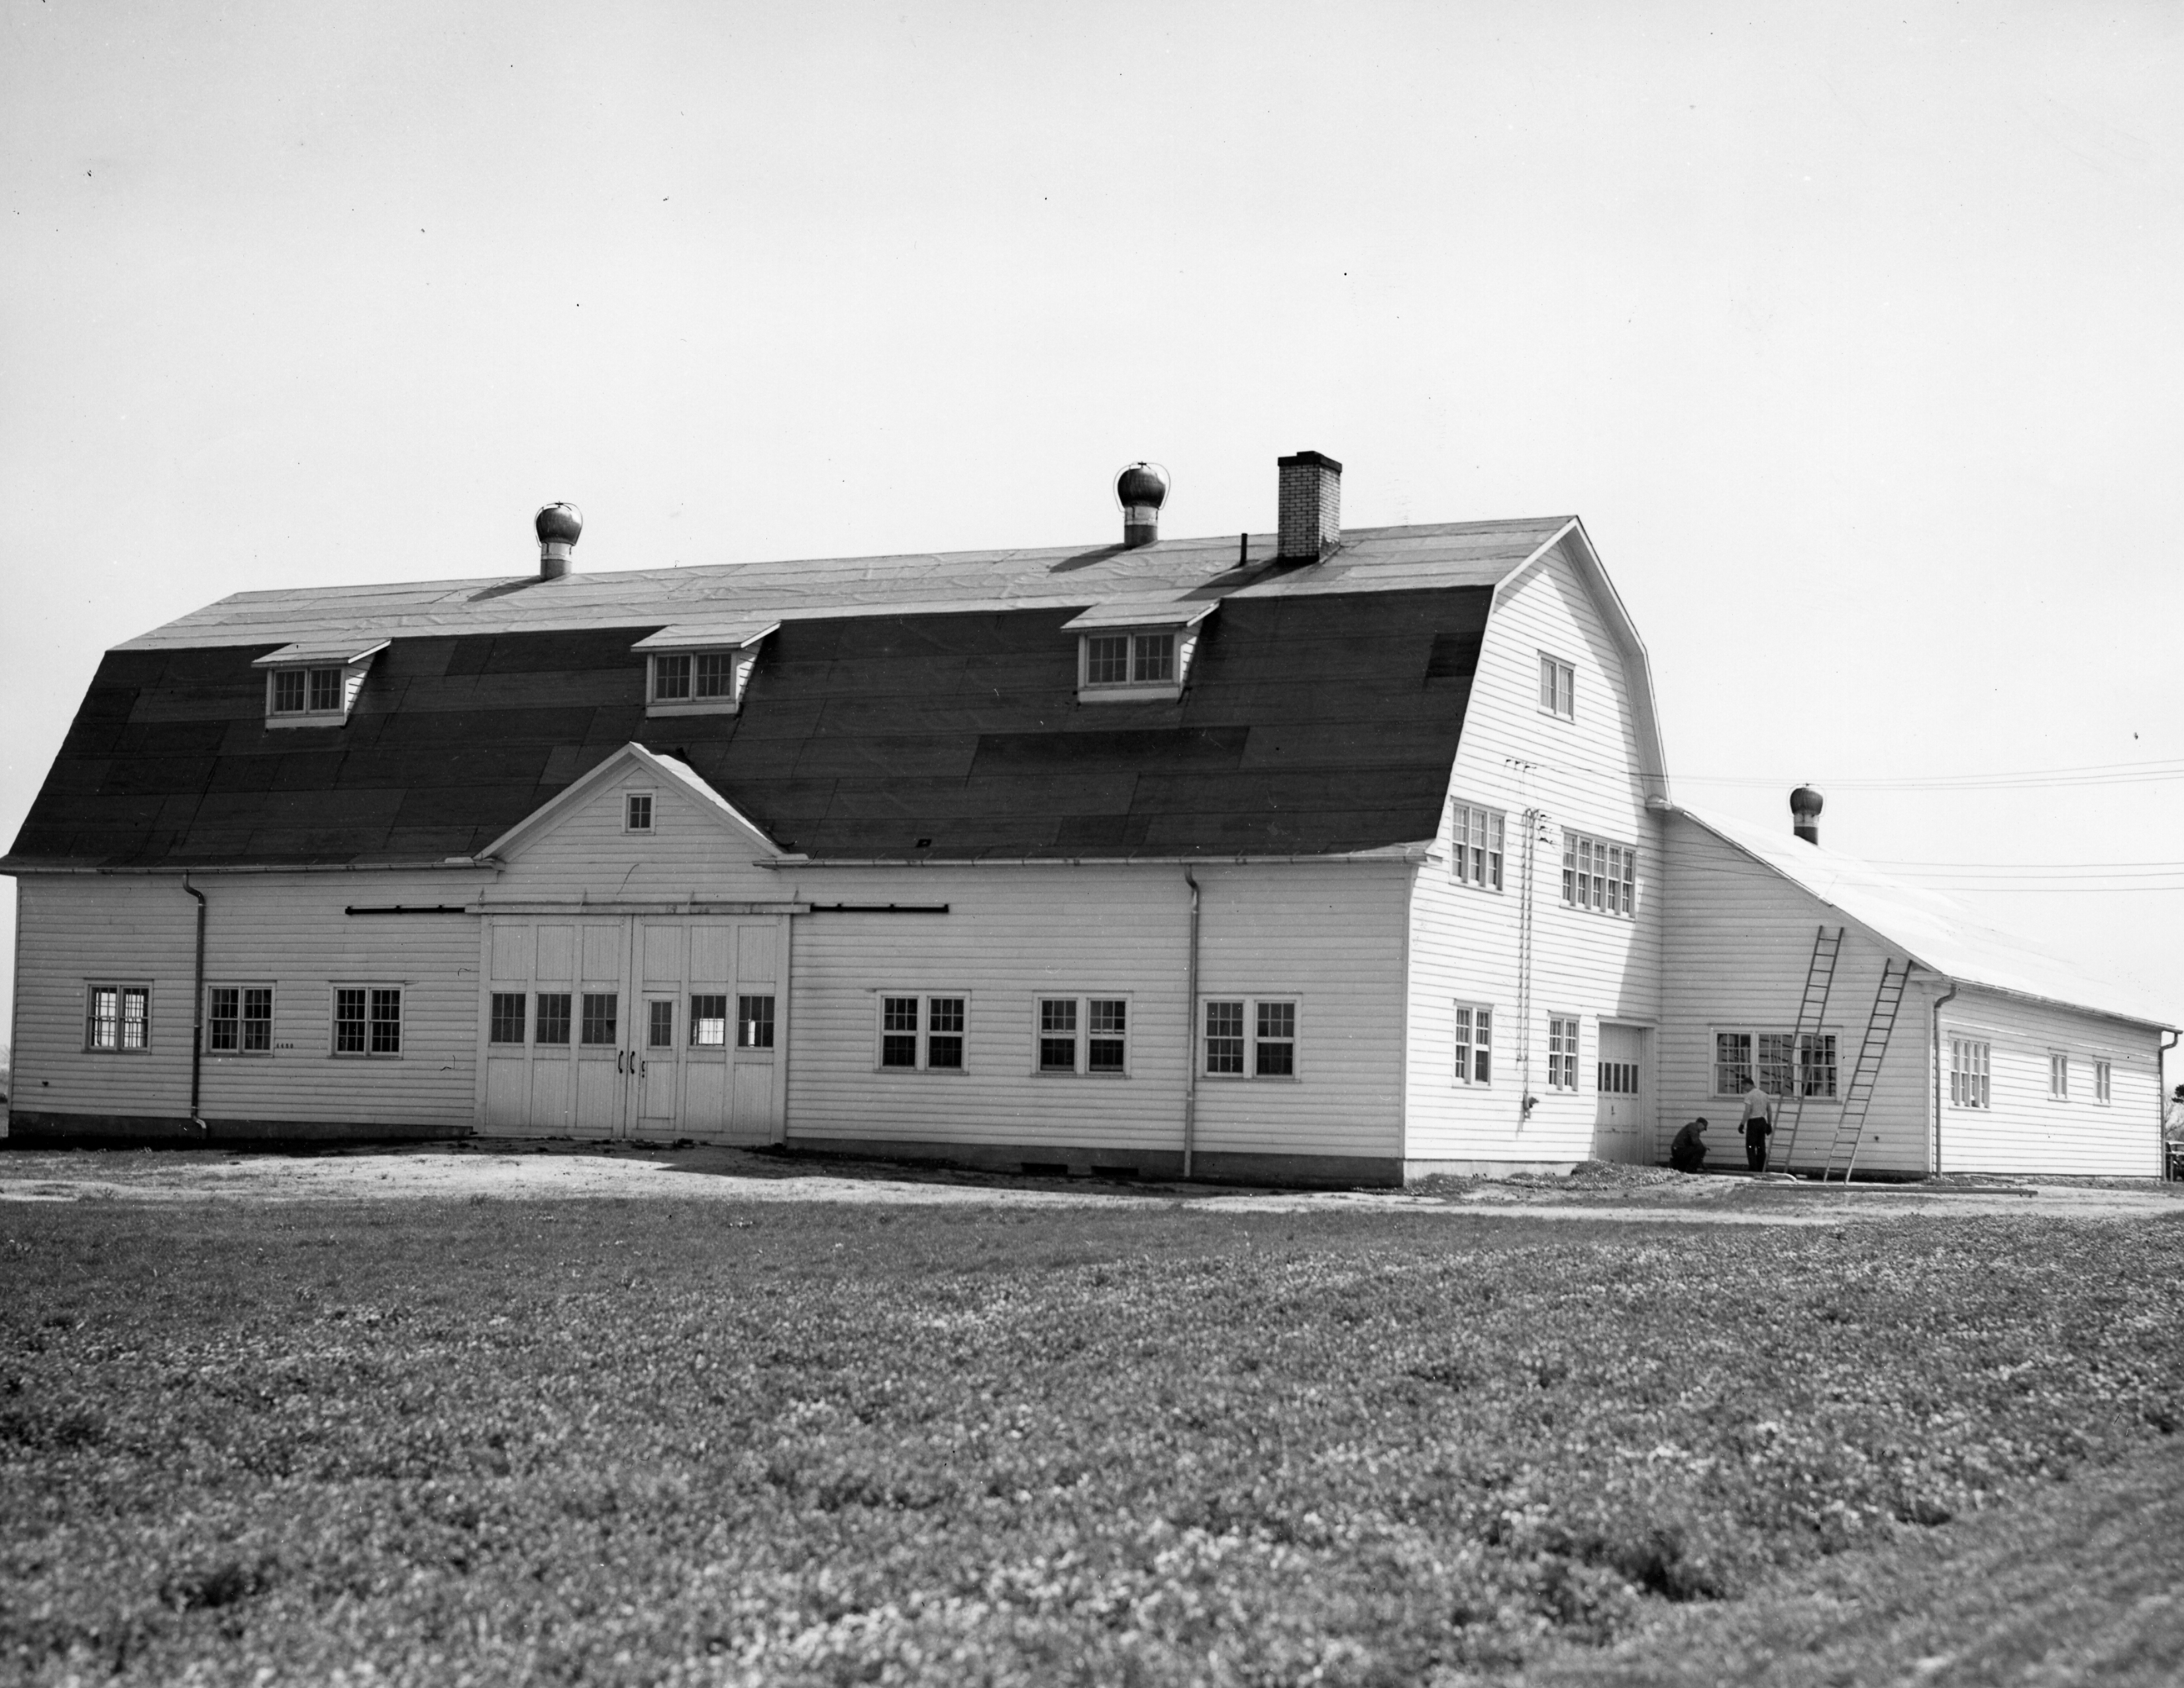 Photograph of the Farm Crop Building